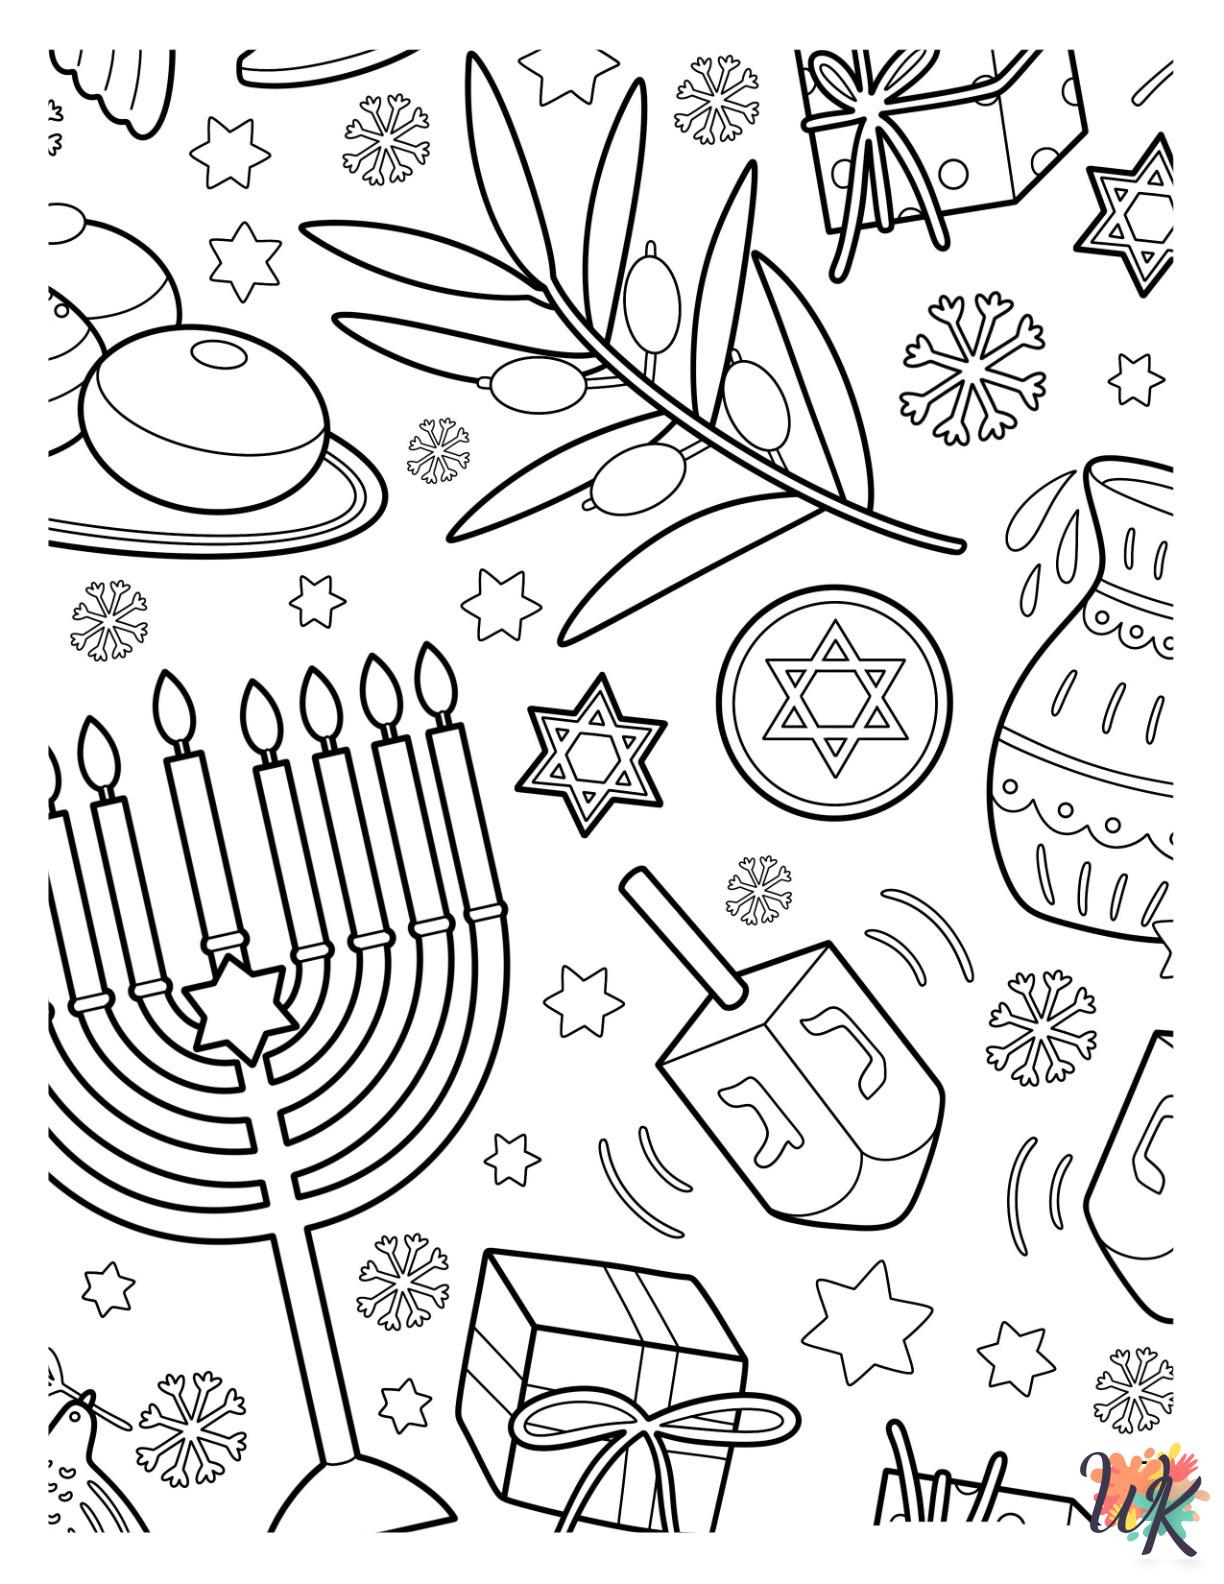 Hanukkah cards coloring pages